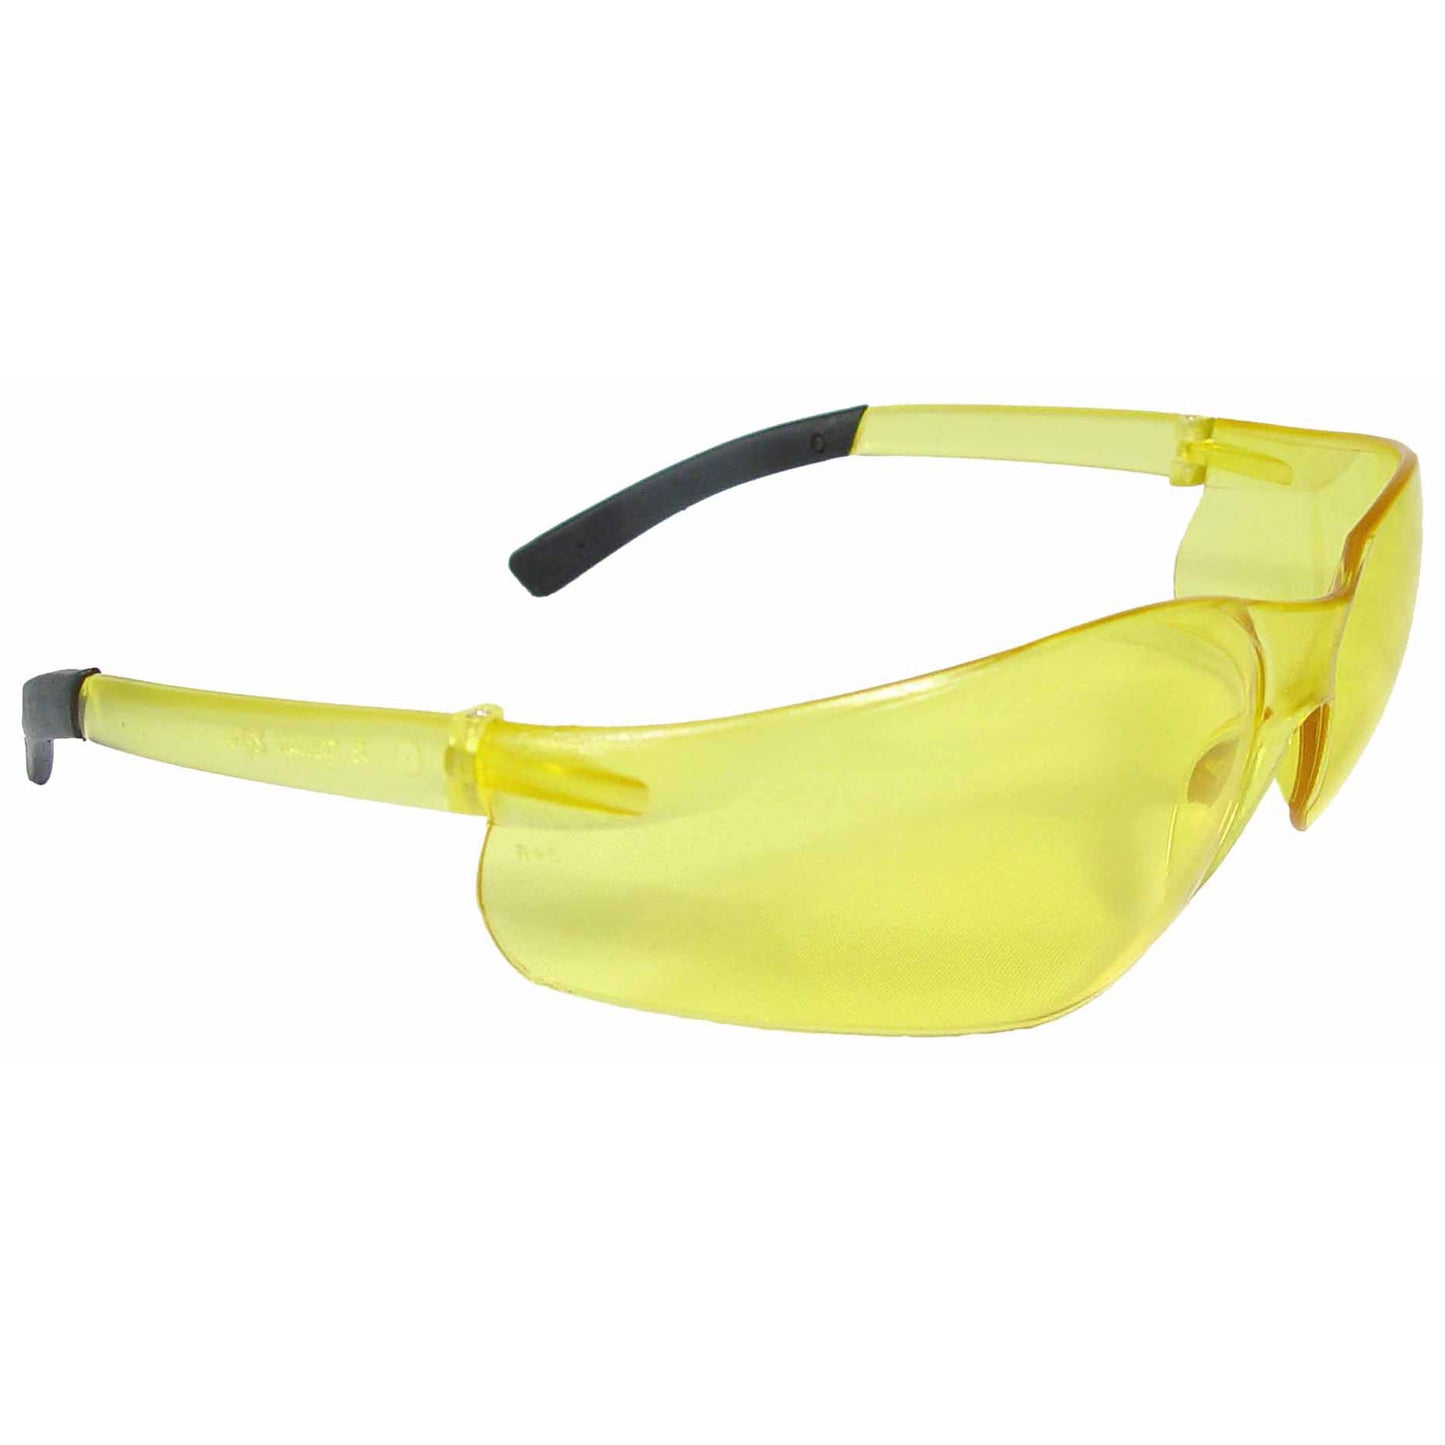 Radians Rad-Atac Safety Eyewear